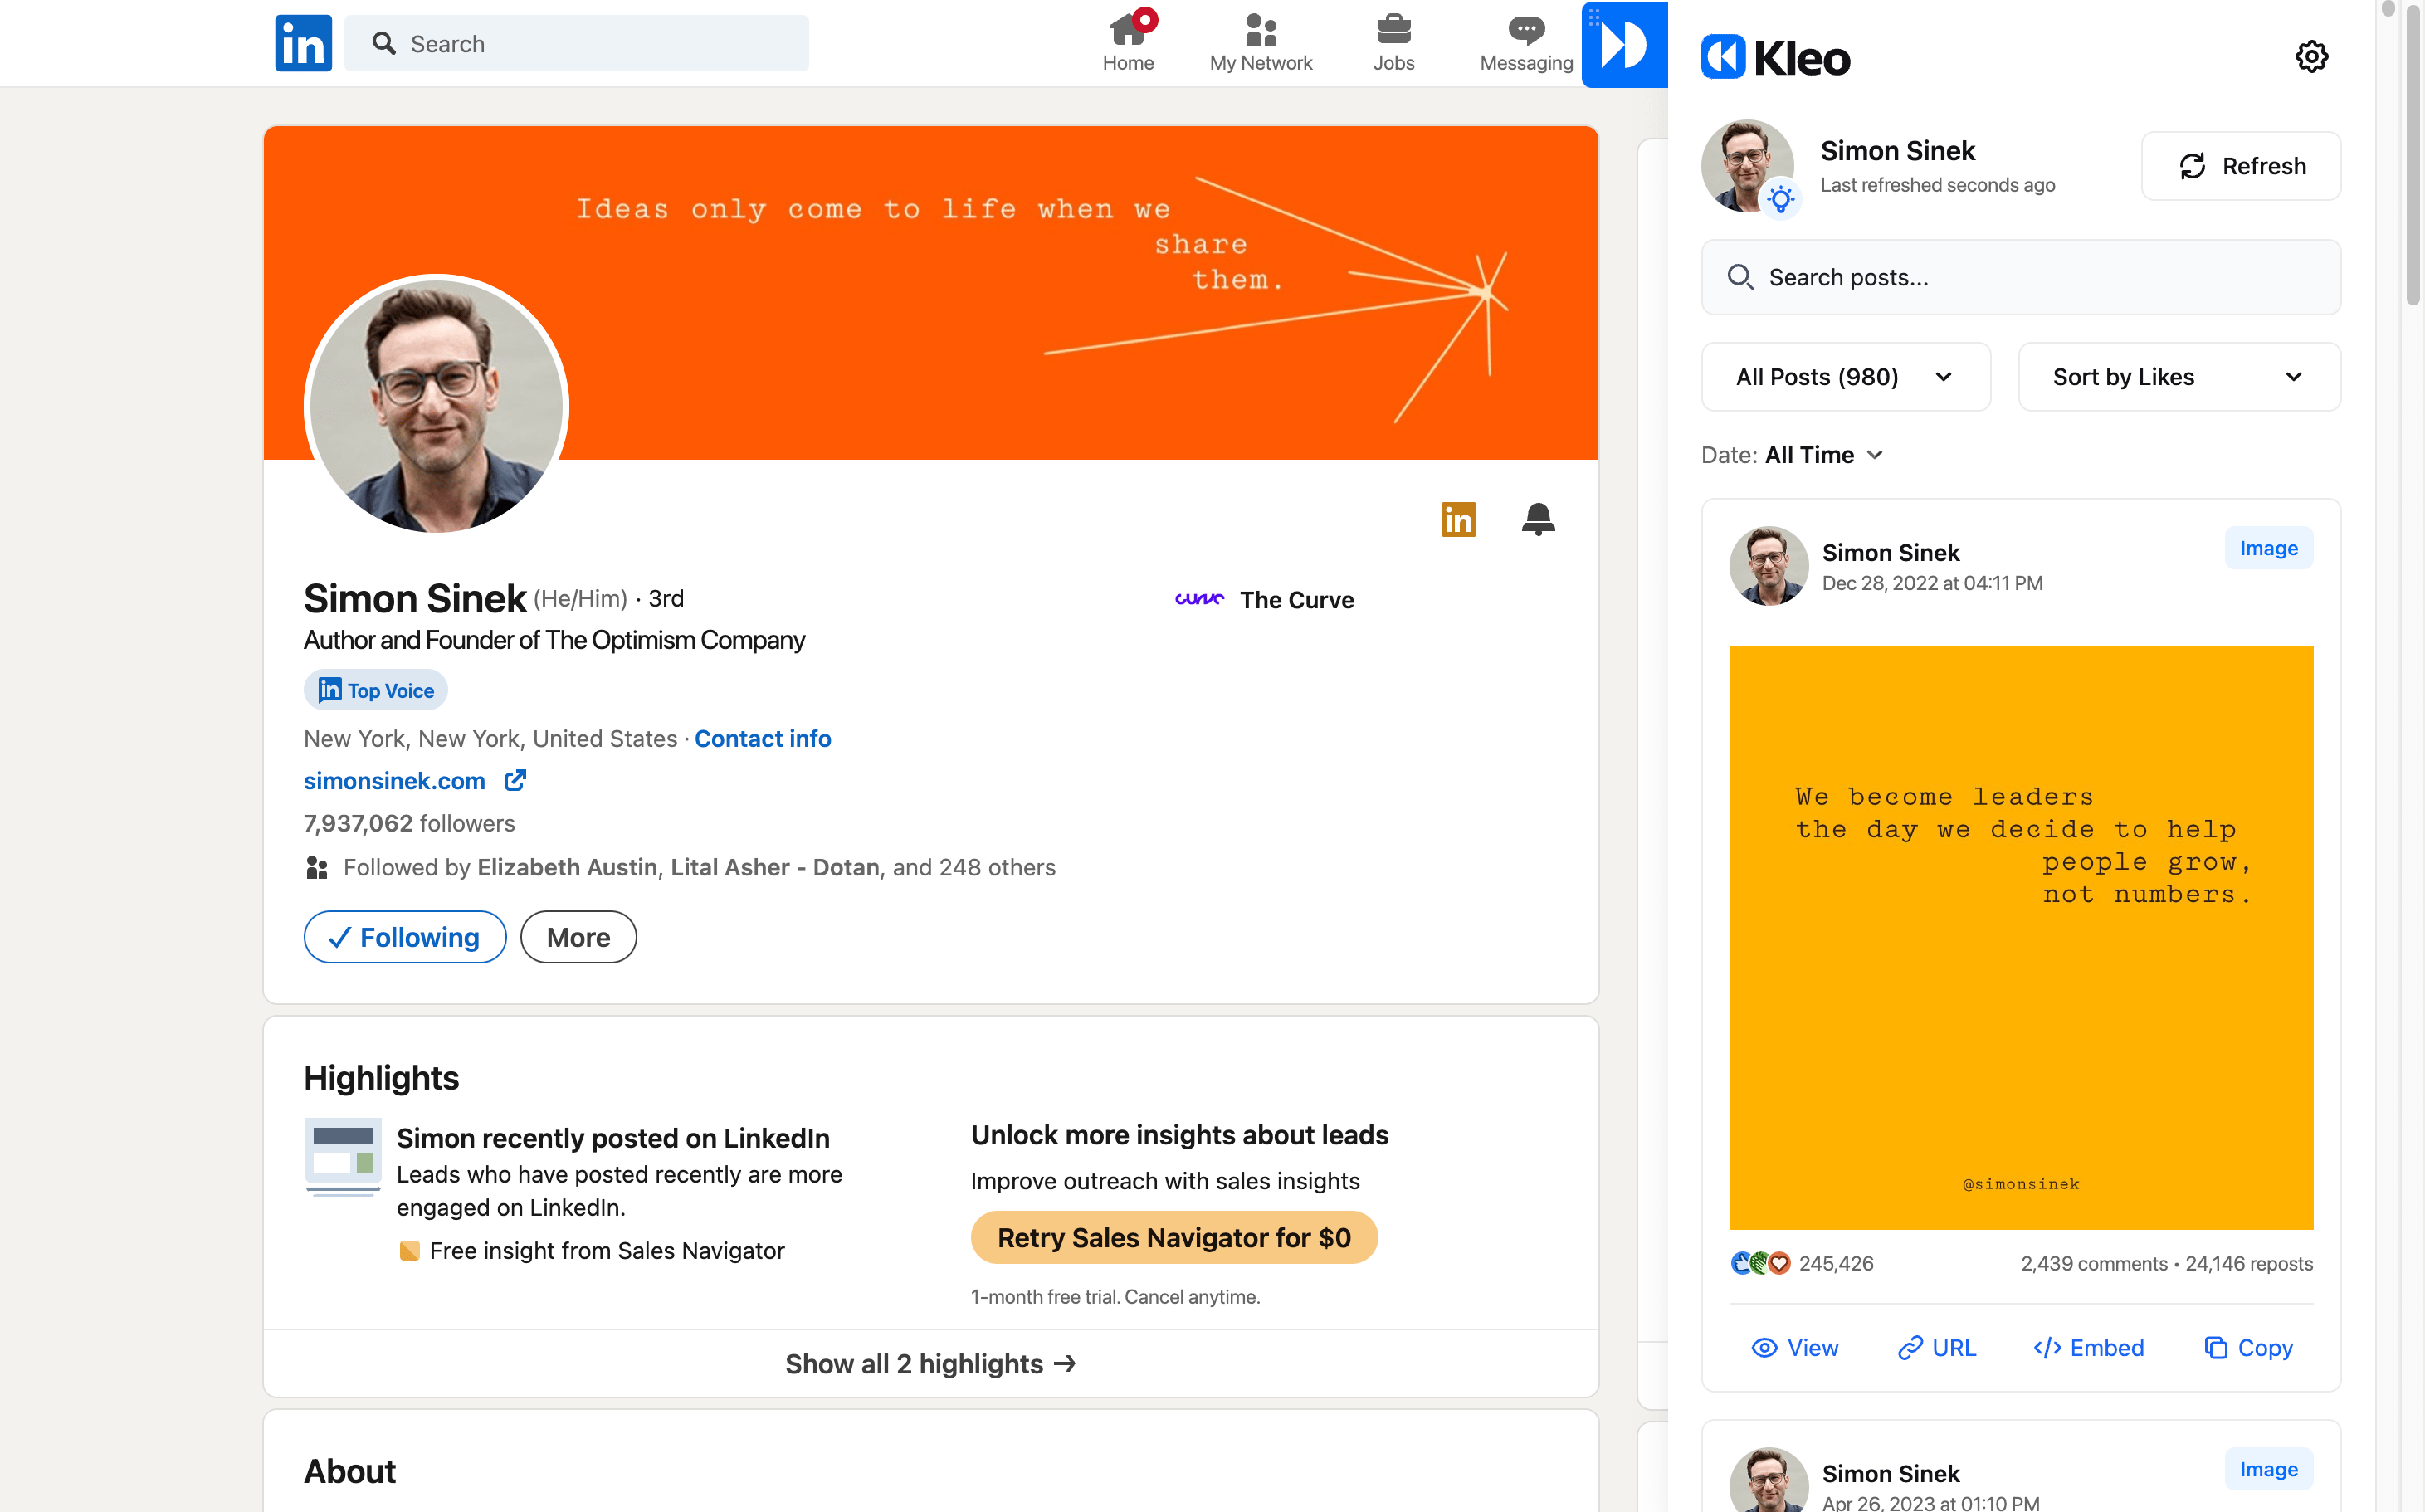 Simon-Sinek-LinkedIn-Kleo-Profile-min